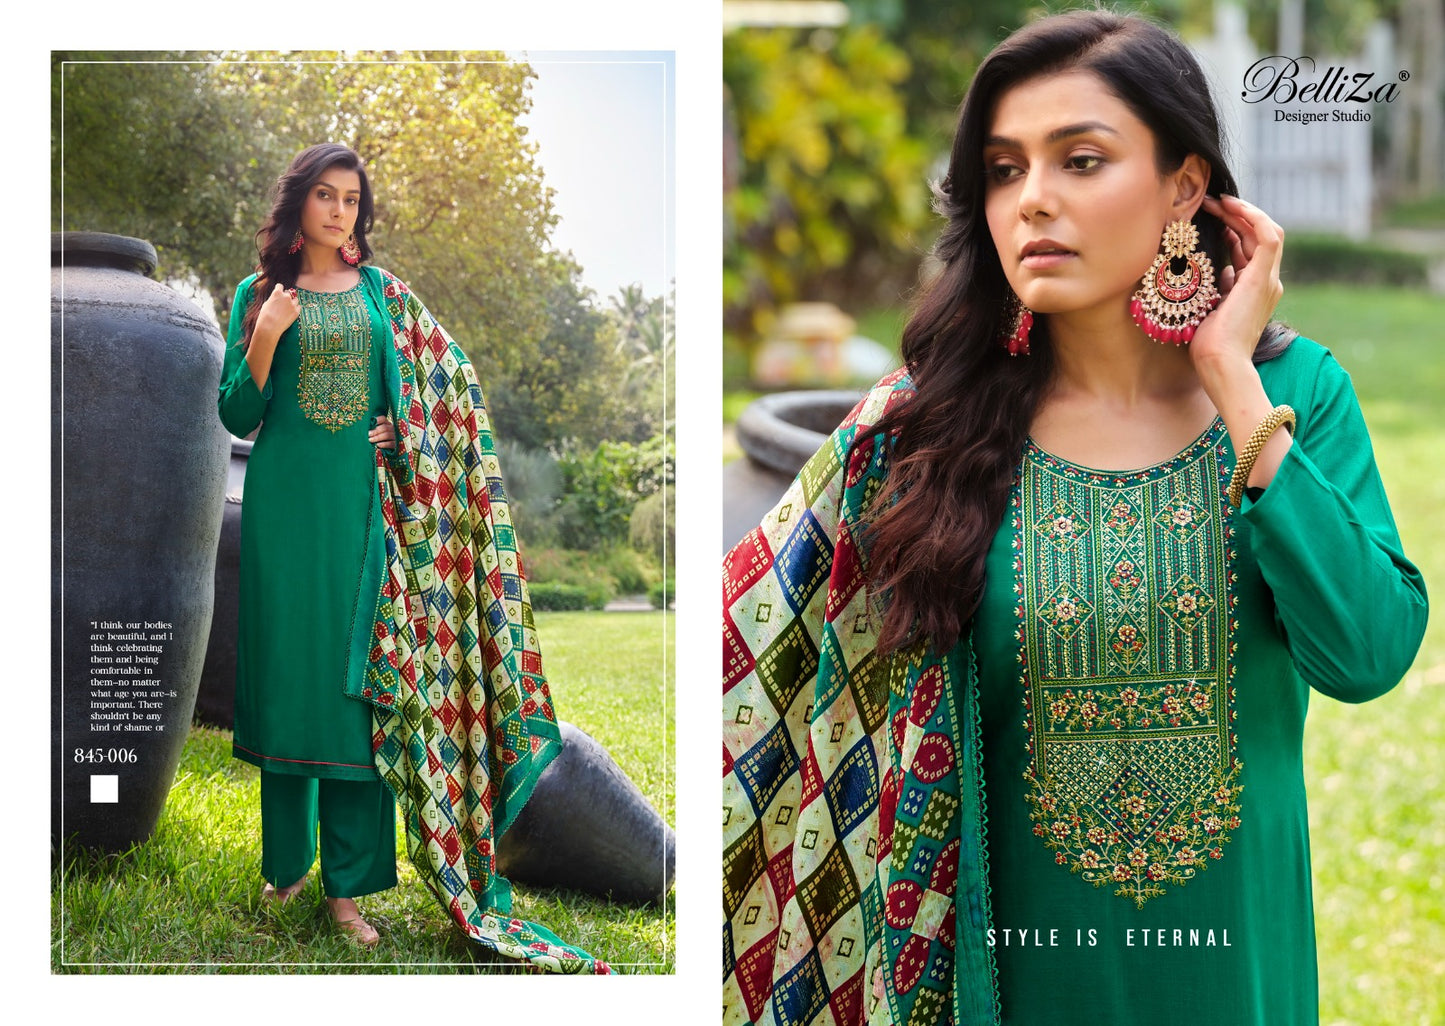 Lovina Belliza Designer Studio Rayon Karachi Salwar Suits